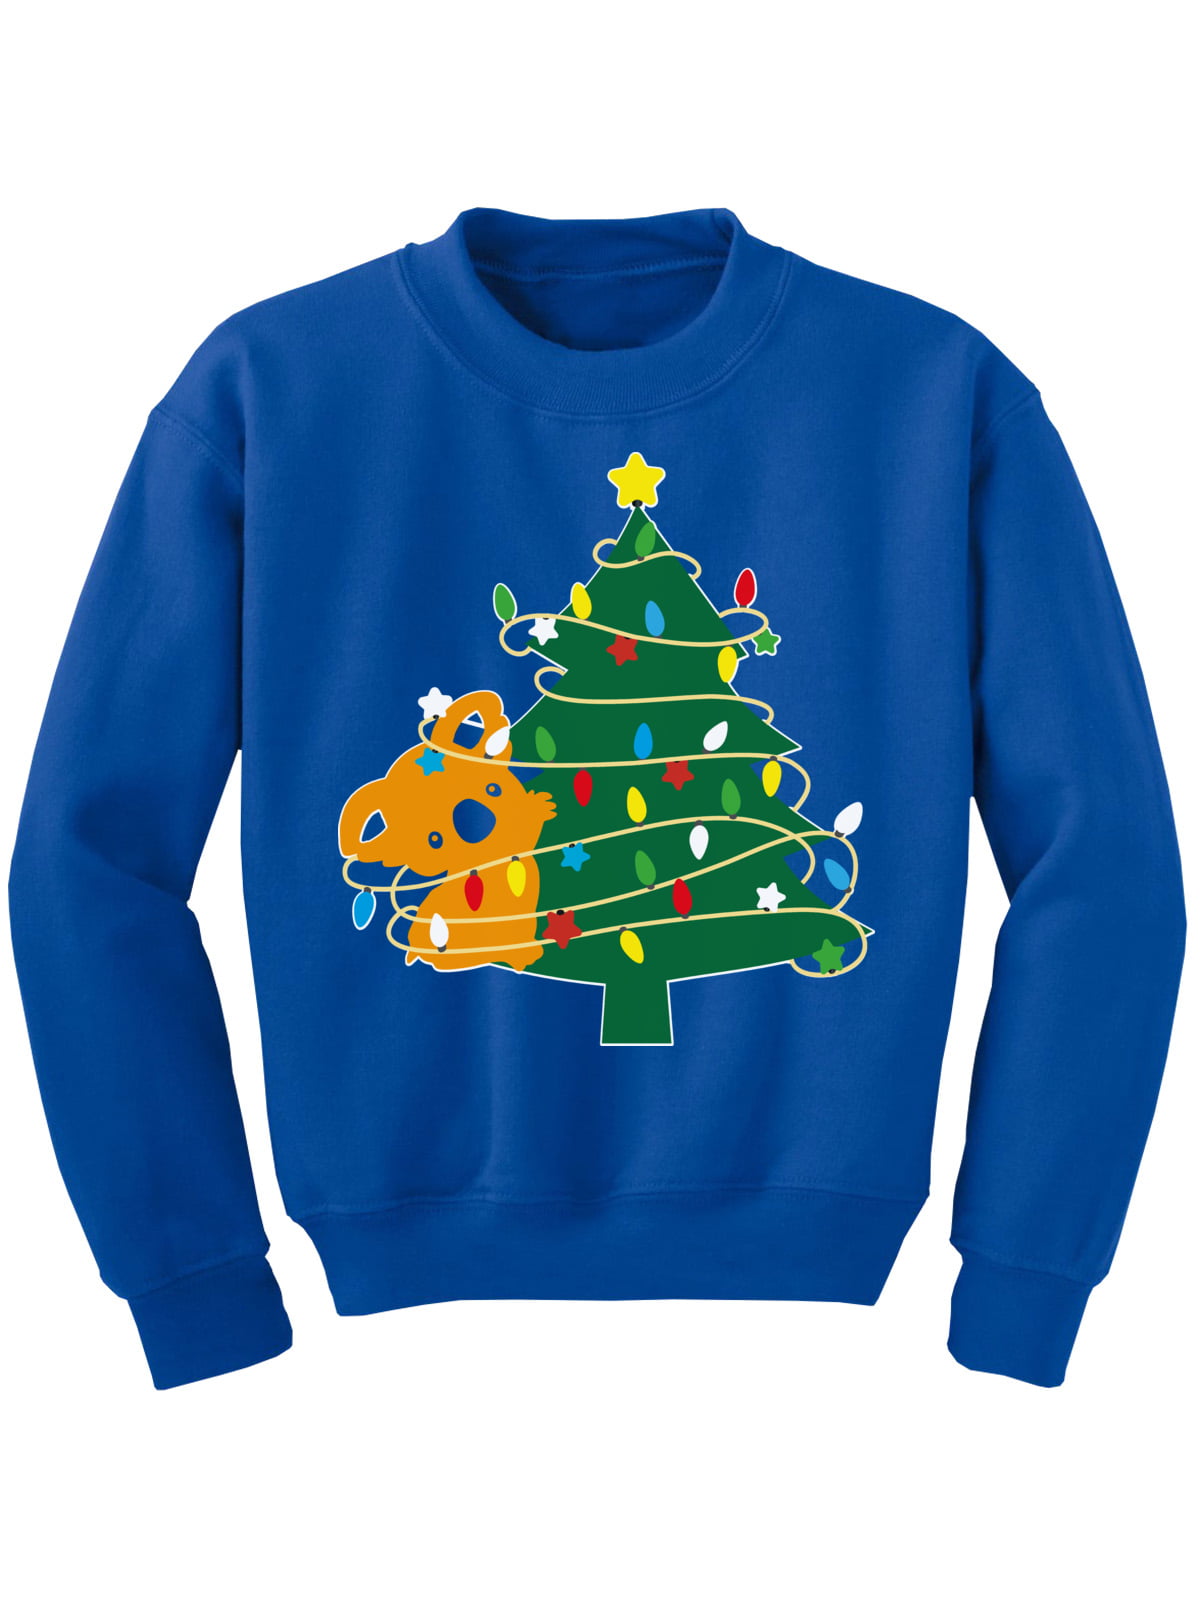 Awkward Styles Ugly Xmas Sweater for Boys Girls Kids Youth Christmas Koala Sweatshirt 